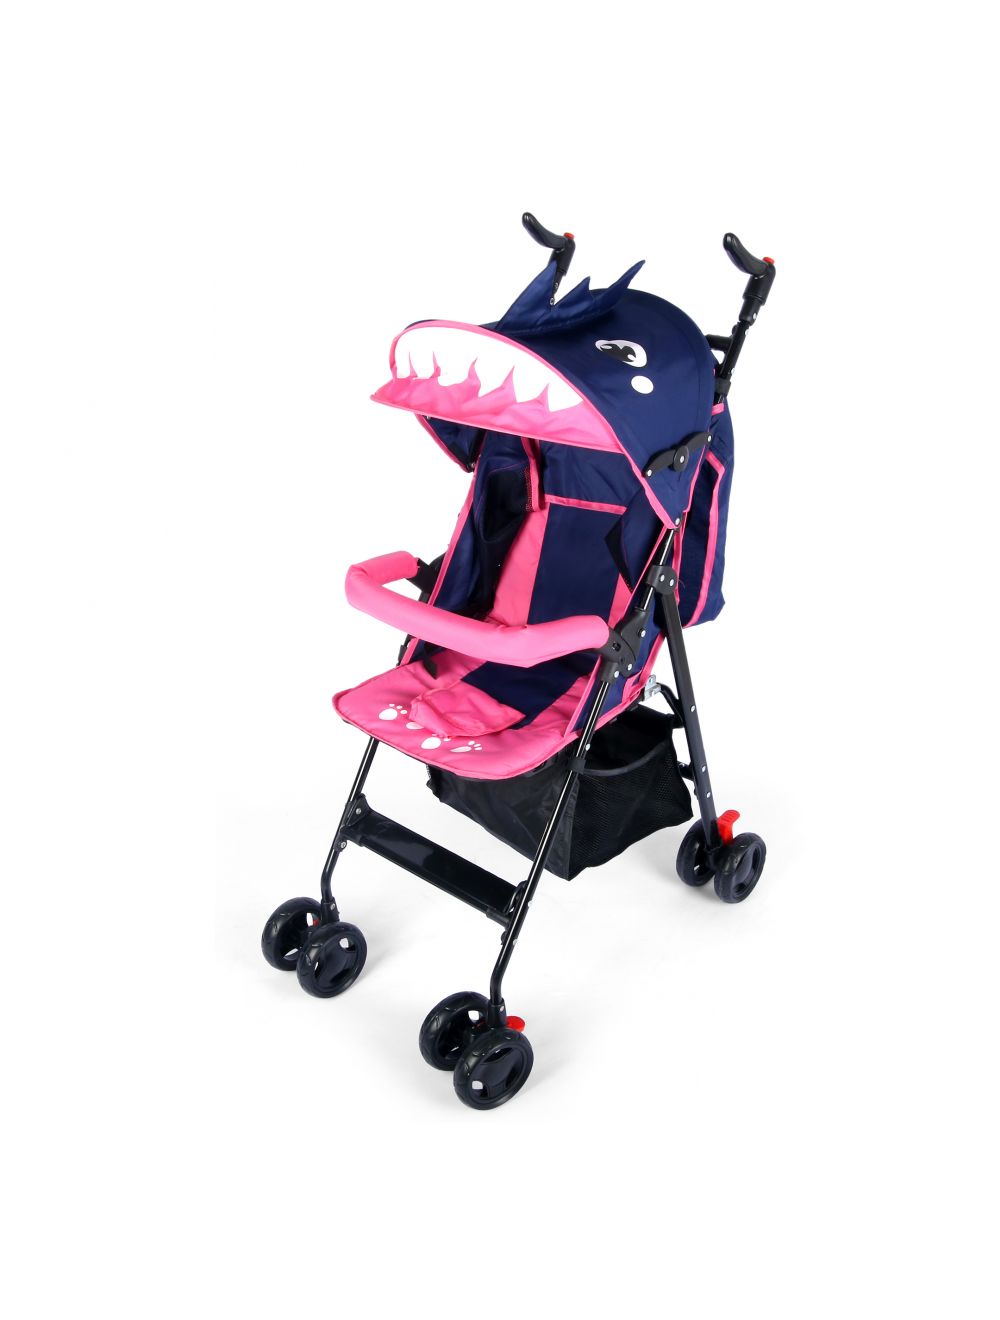 Joymaker Baby Stroller Navy Blue & Pink